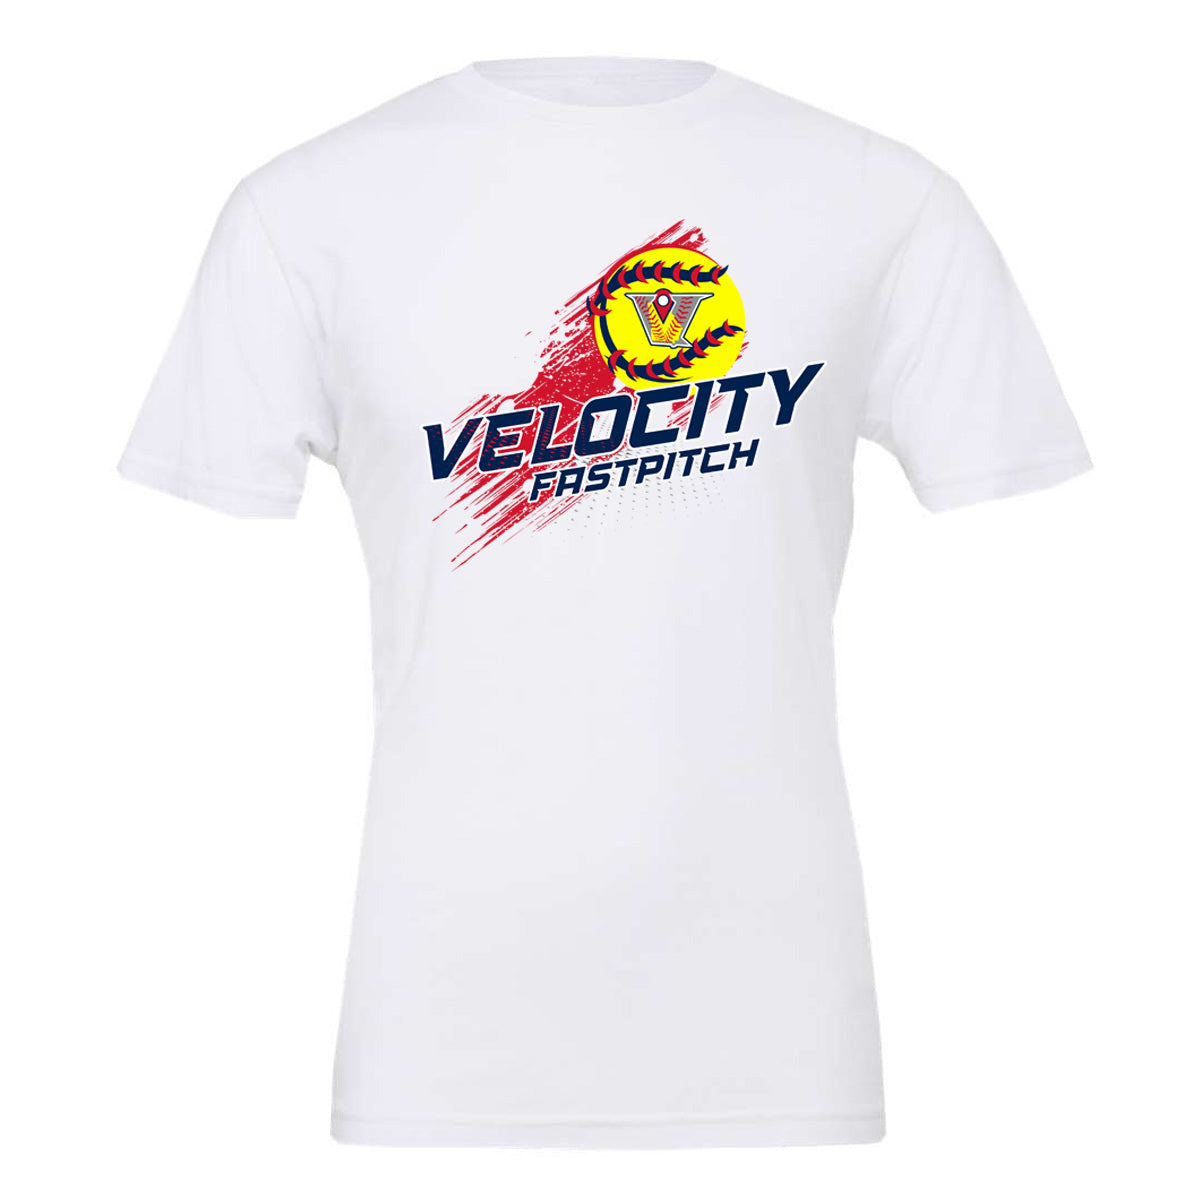 Velo FP - Velocity Fastpitch Streak - White (Tee/Hoodie/Sweatshirt) - Southern Grace Creations